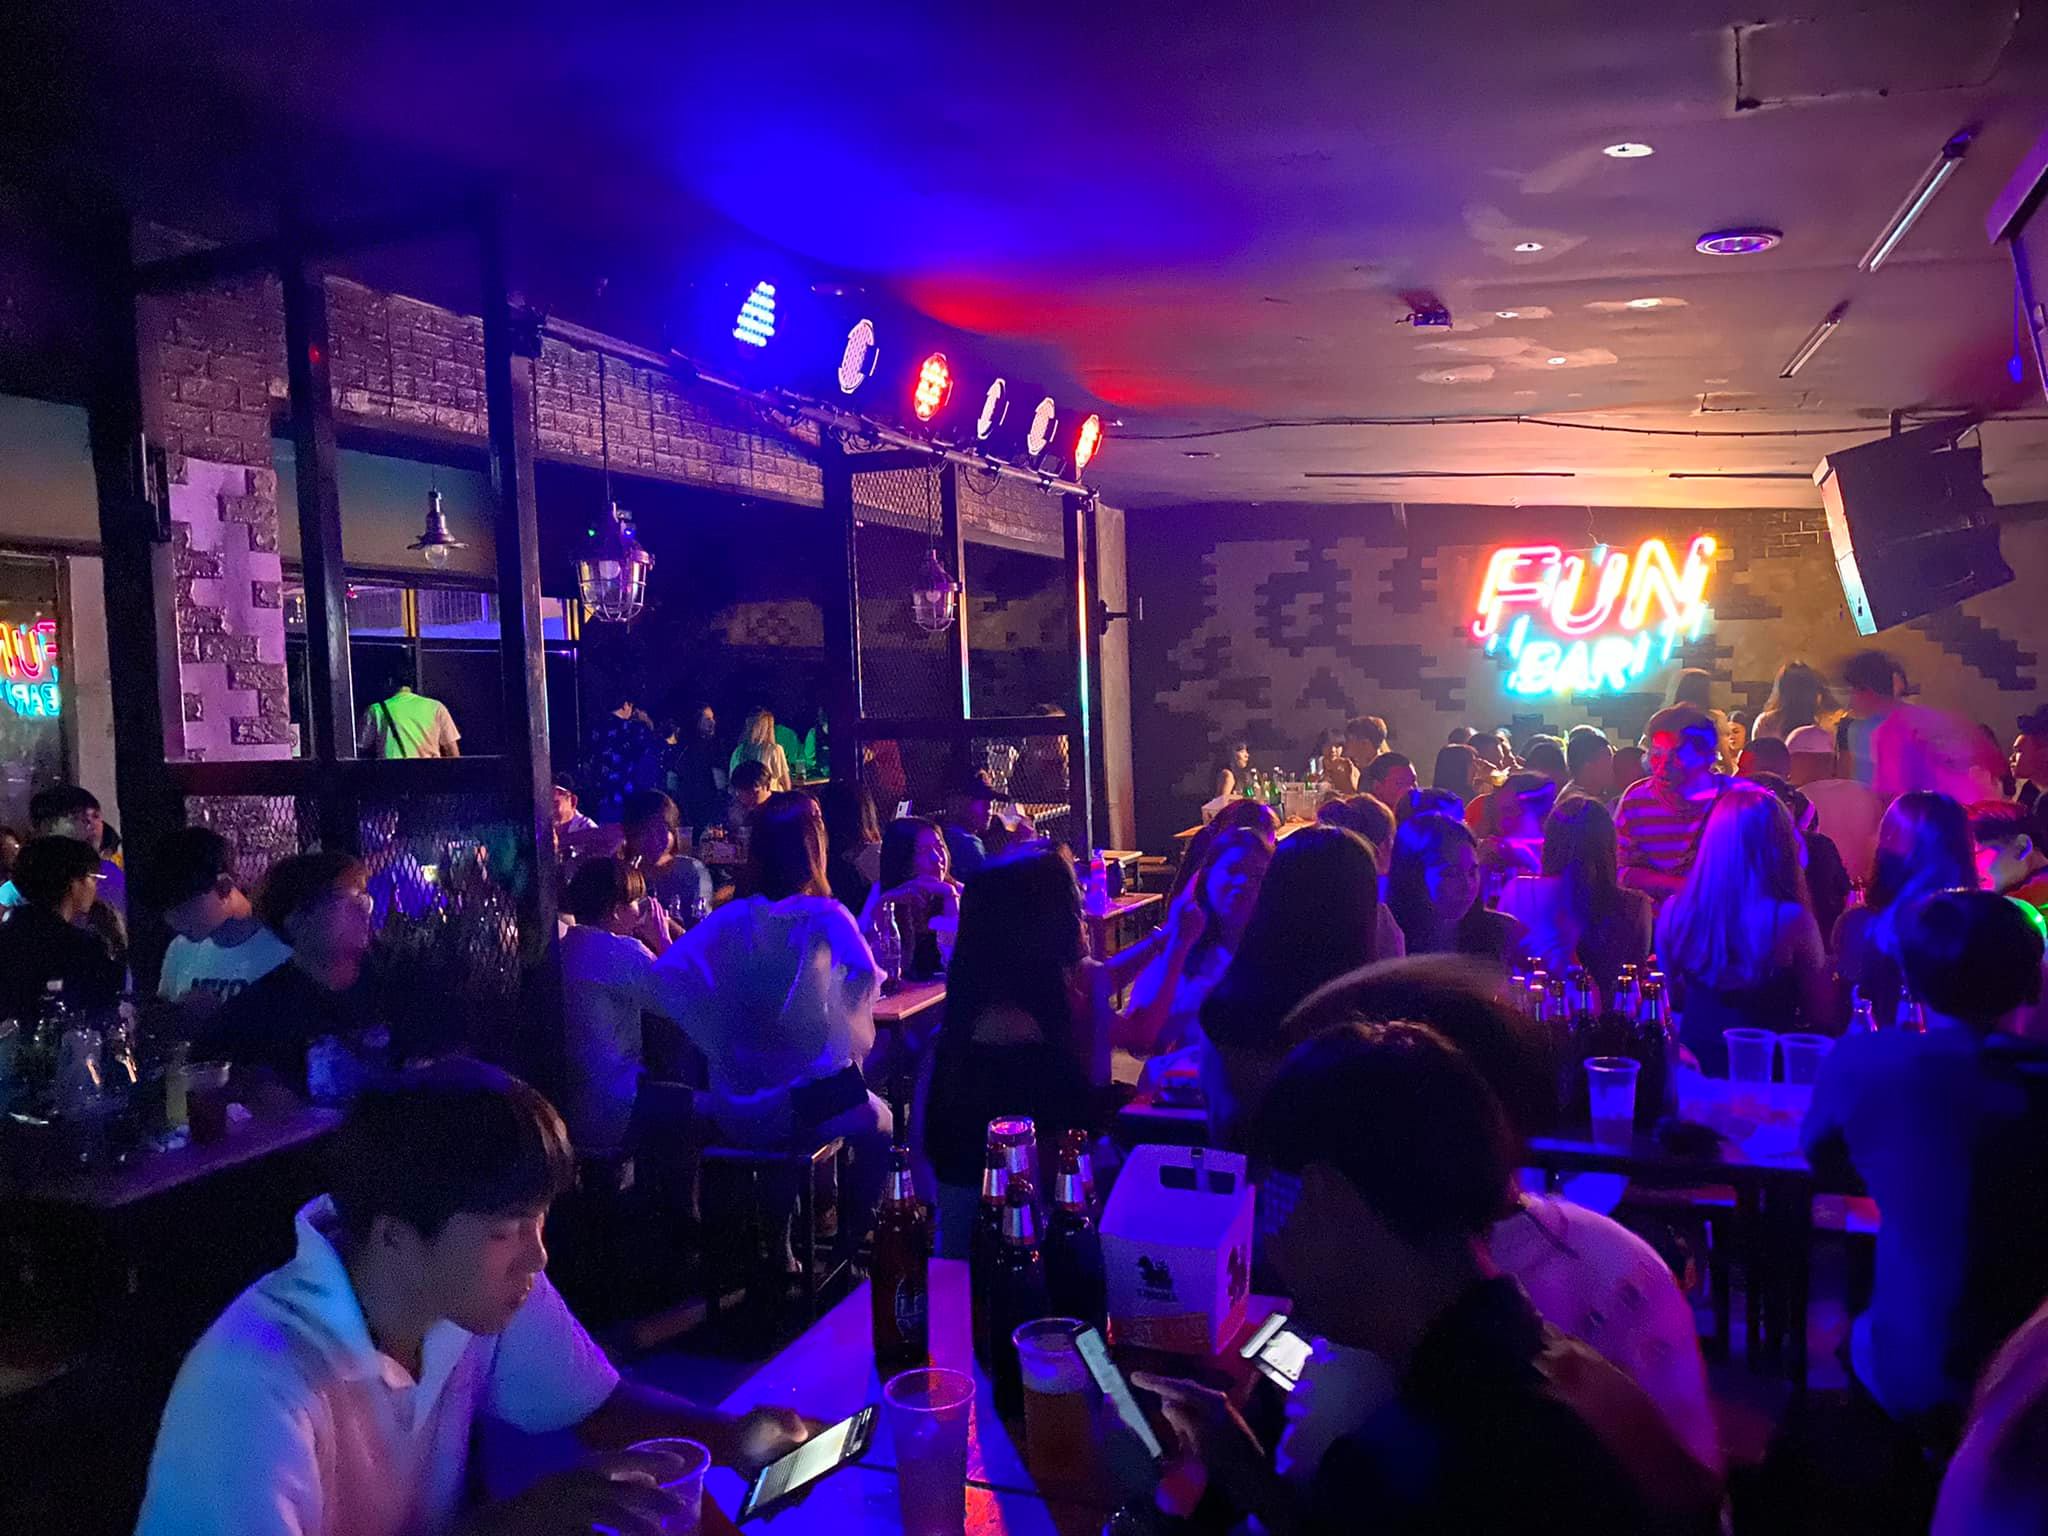 Fun Bar Bkk (Fun Bar Bkk) : Bangkok (กรุงเทพมหานคร)